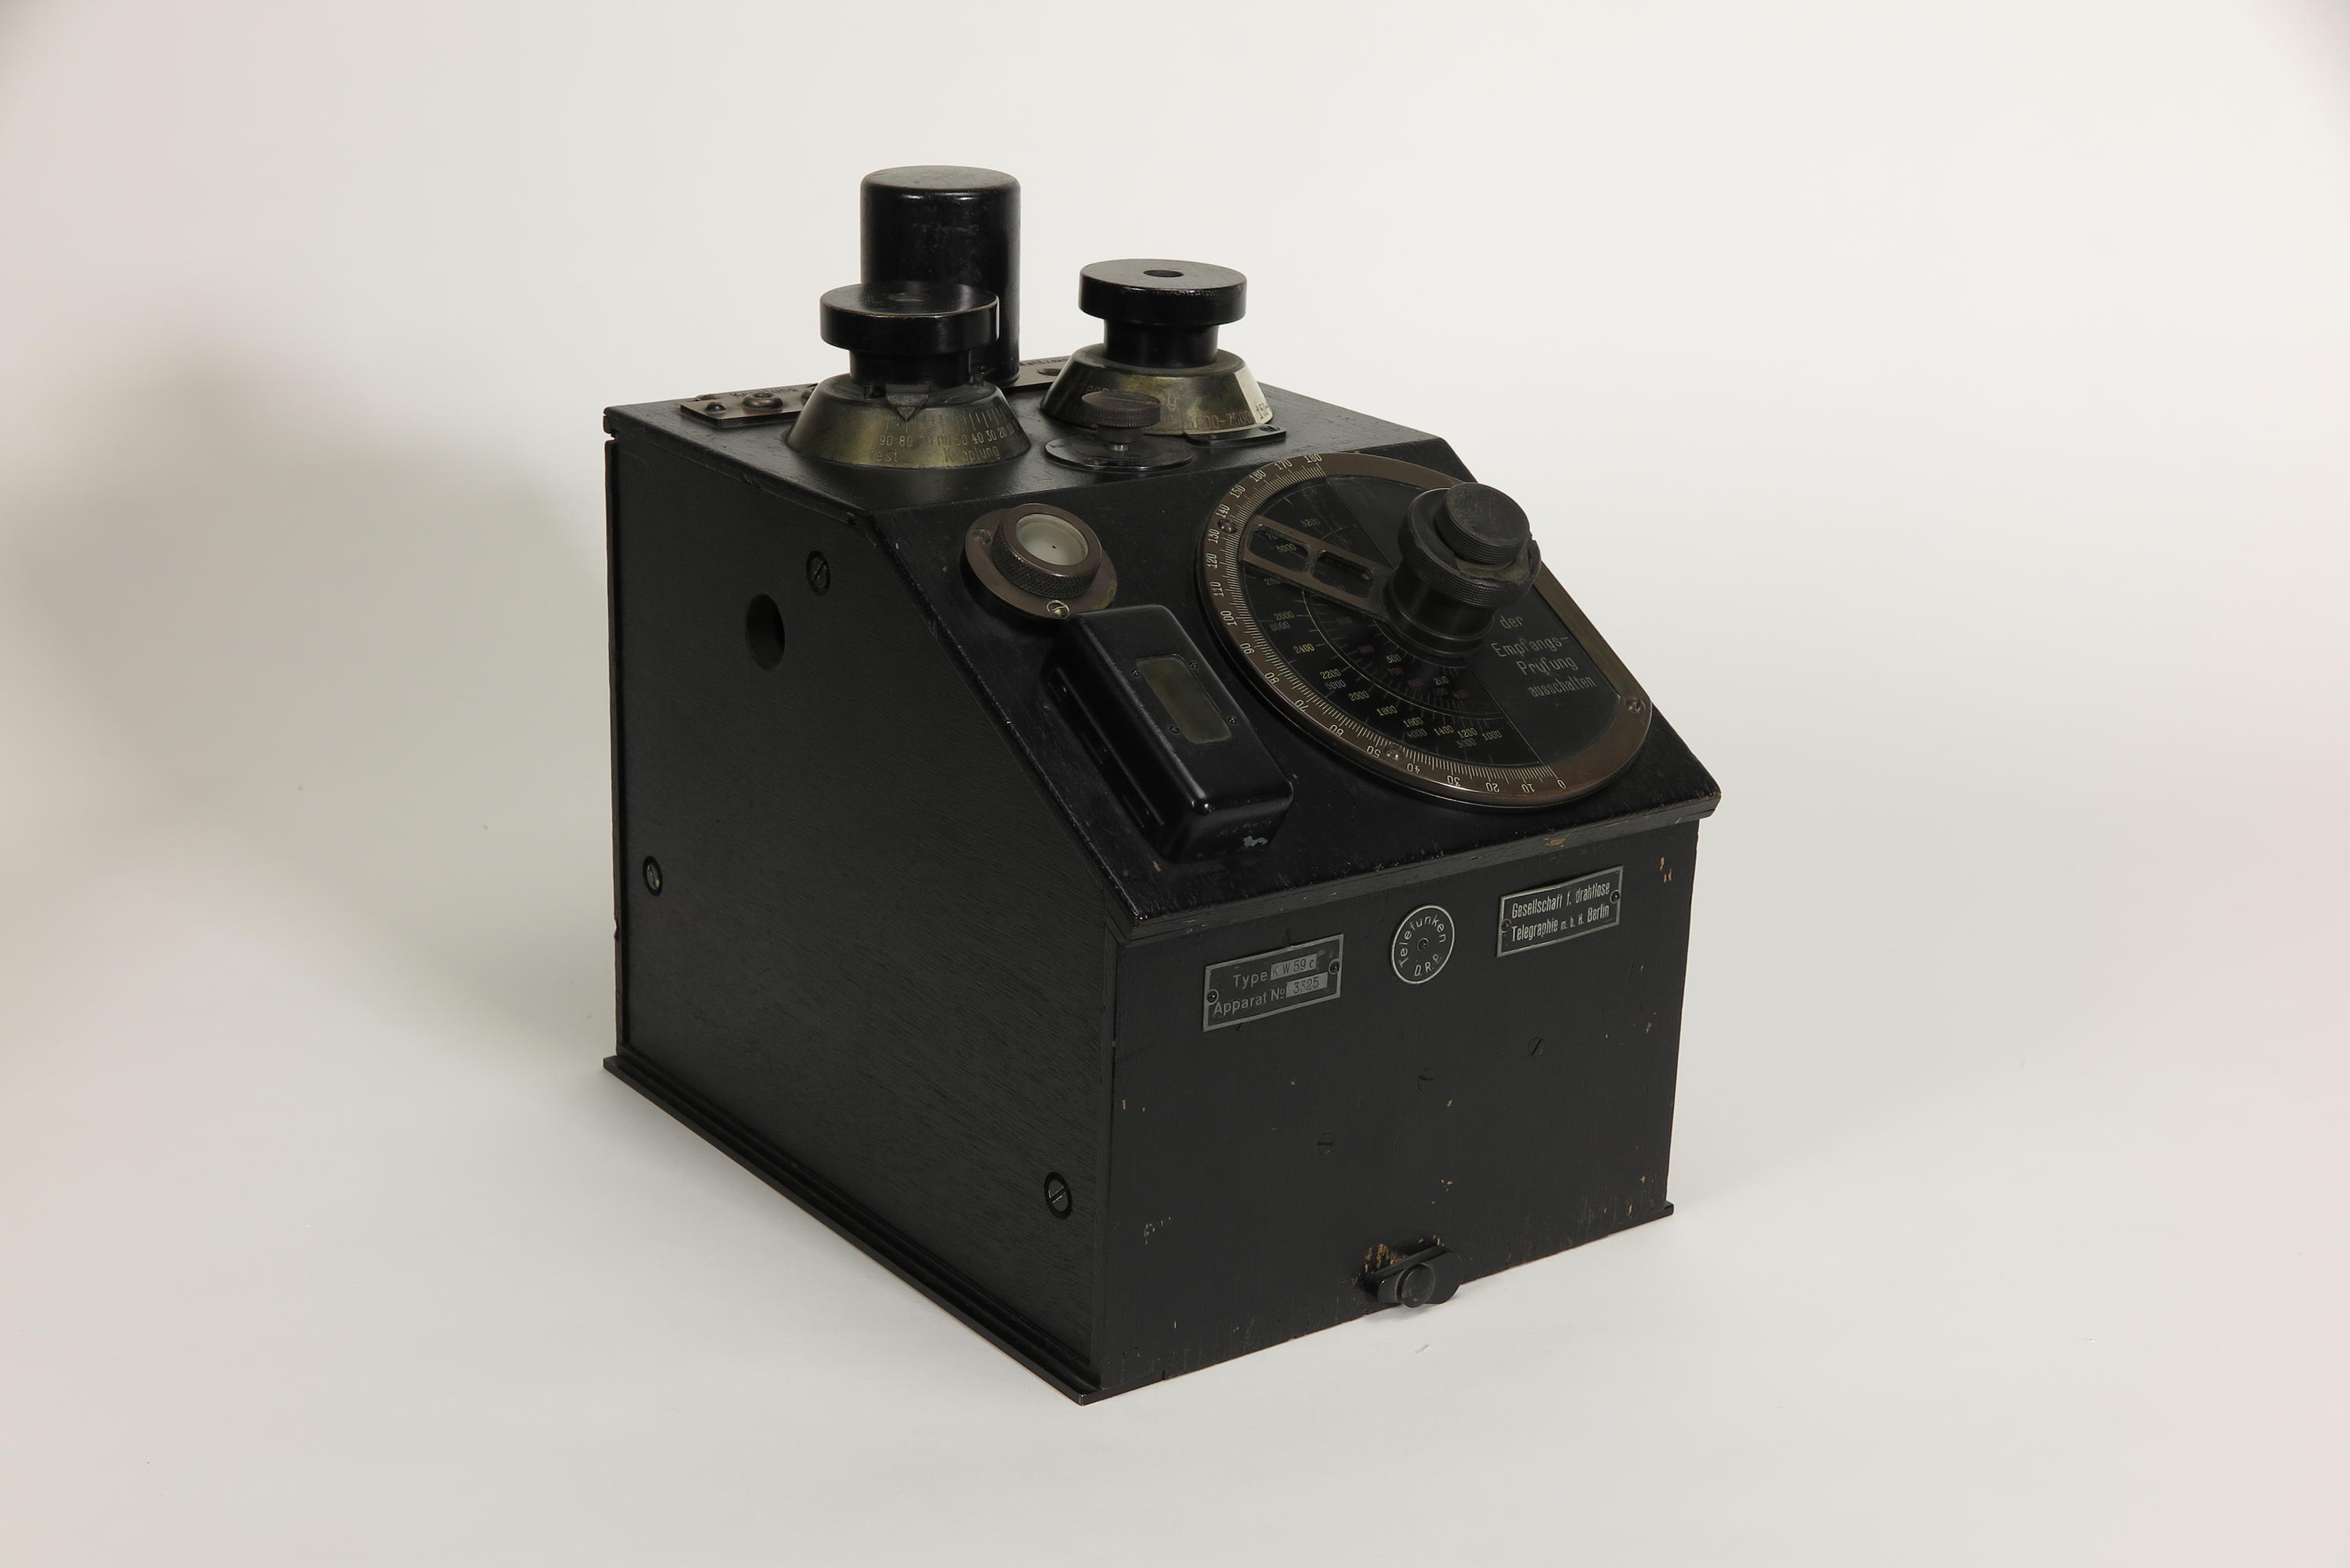 Wellenmesser Telefunken KW 59c (Deutsches Technikmuseum CC BY)